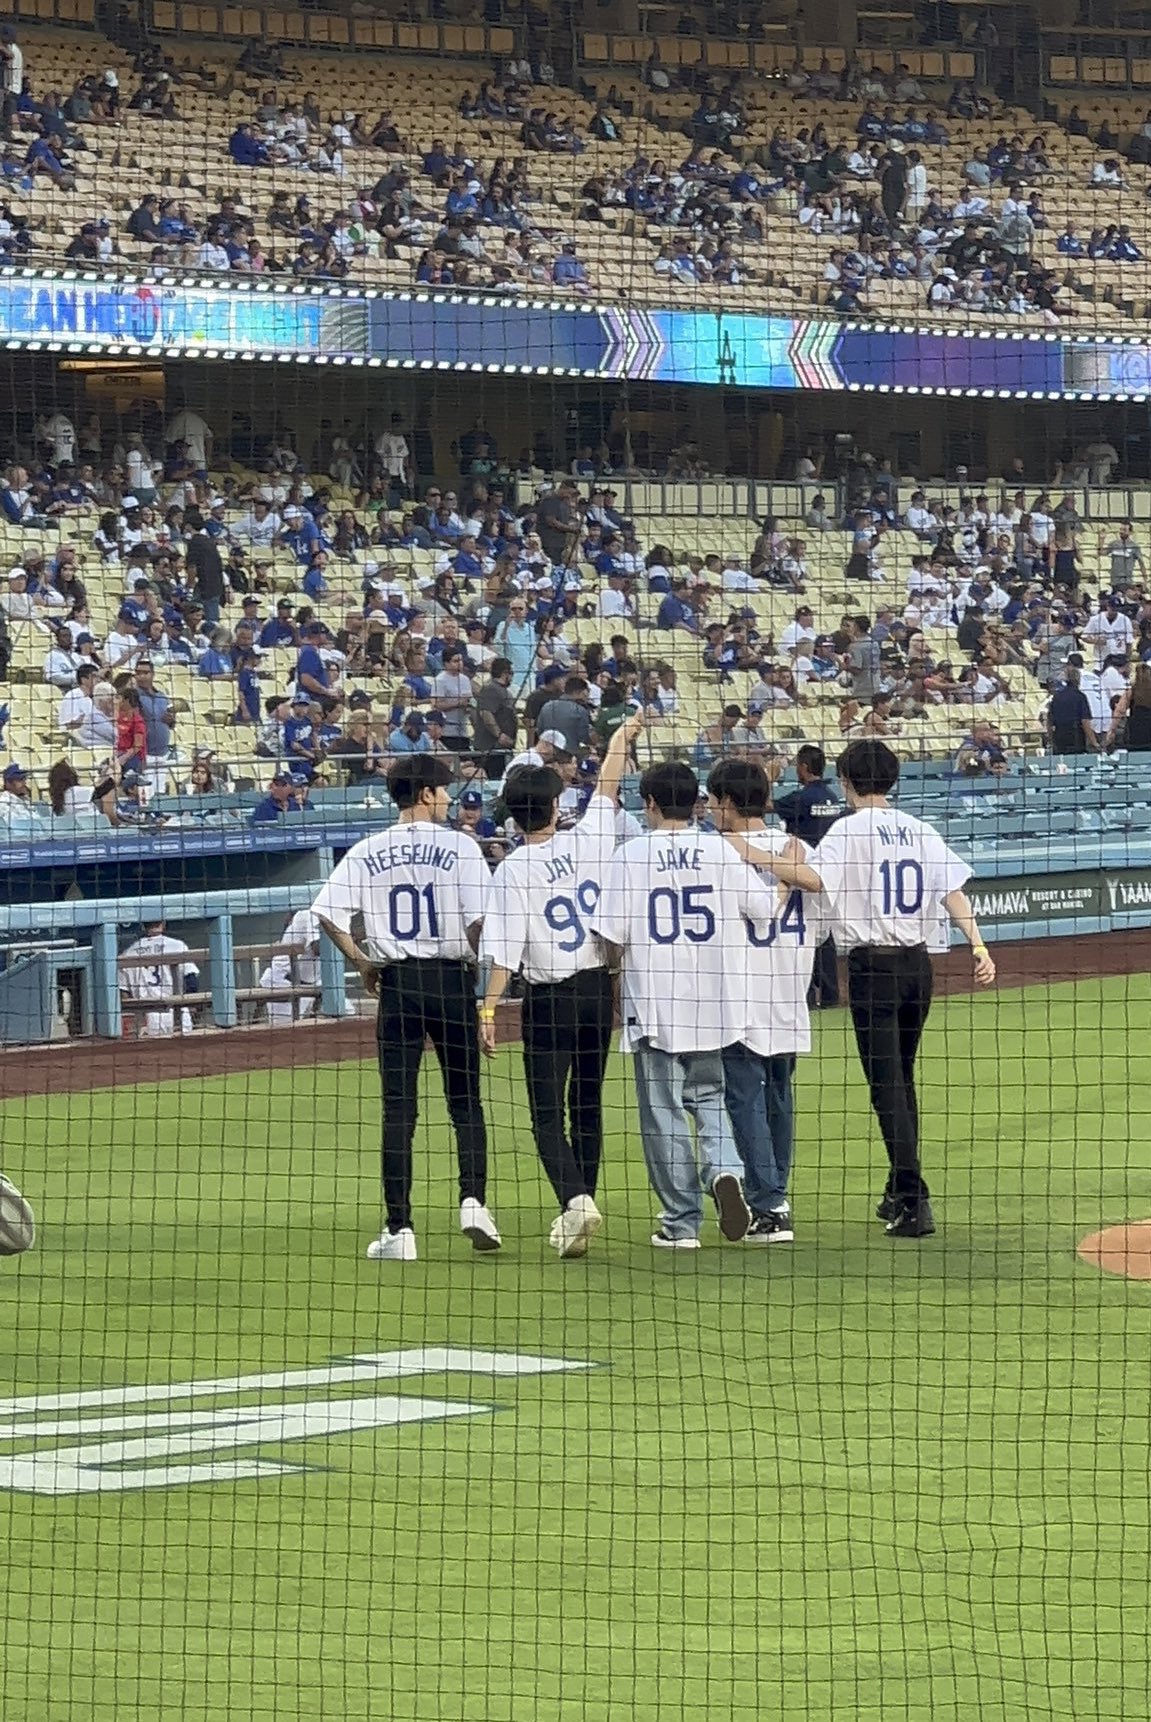 sofi on X: Enhypen at LA Dodgers Korea Night!  / X